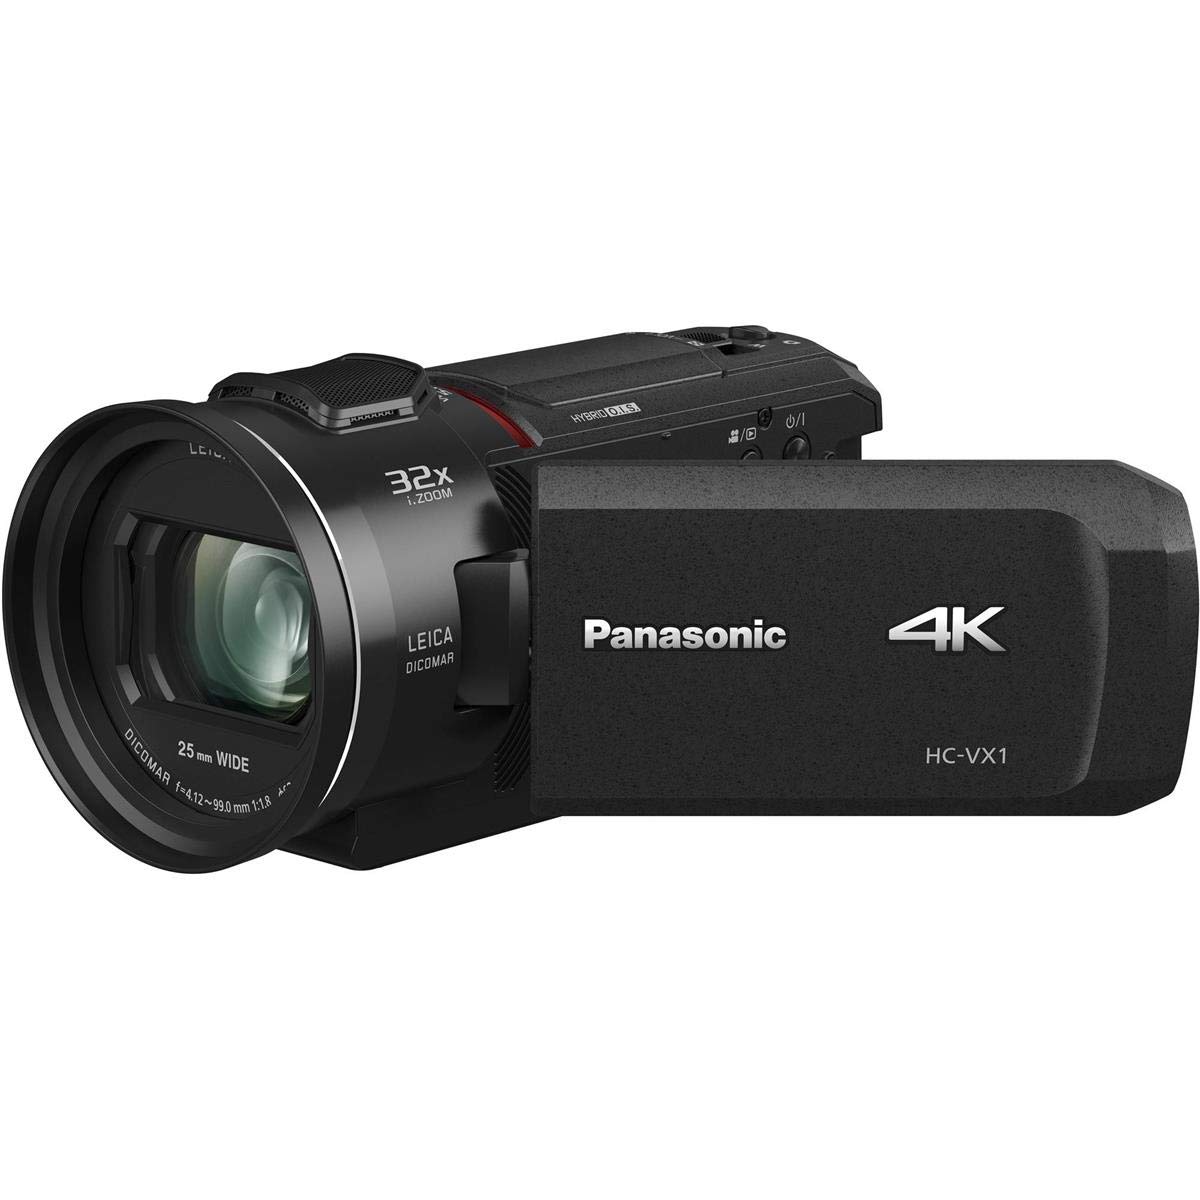 Panasonic HC-VX1K 4K UHD Camcorder, 24x LEICA DICOMAR Lens, HDR Mode, Wireless Multi-Camera Capture, Bundle with Cam Bag + 62mm Filter Kit + 32GB SD Card + Cleaning Kit + Memory Wallet + Cardreader